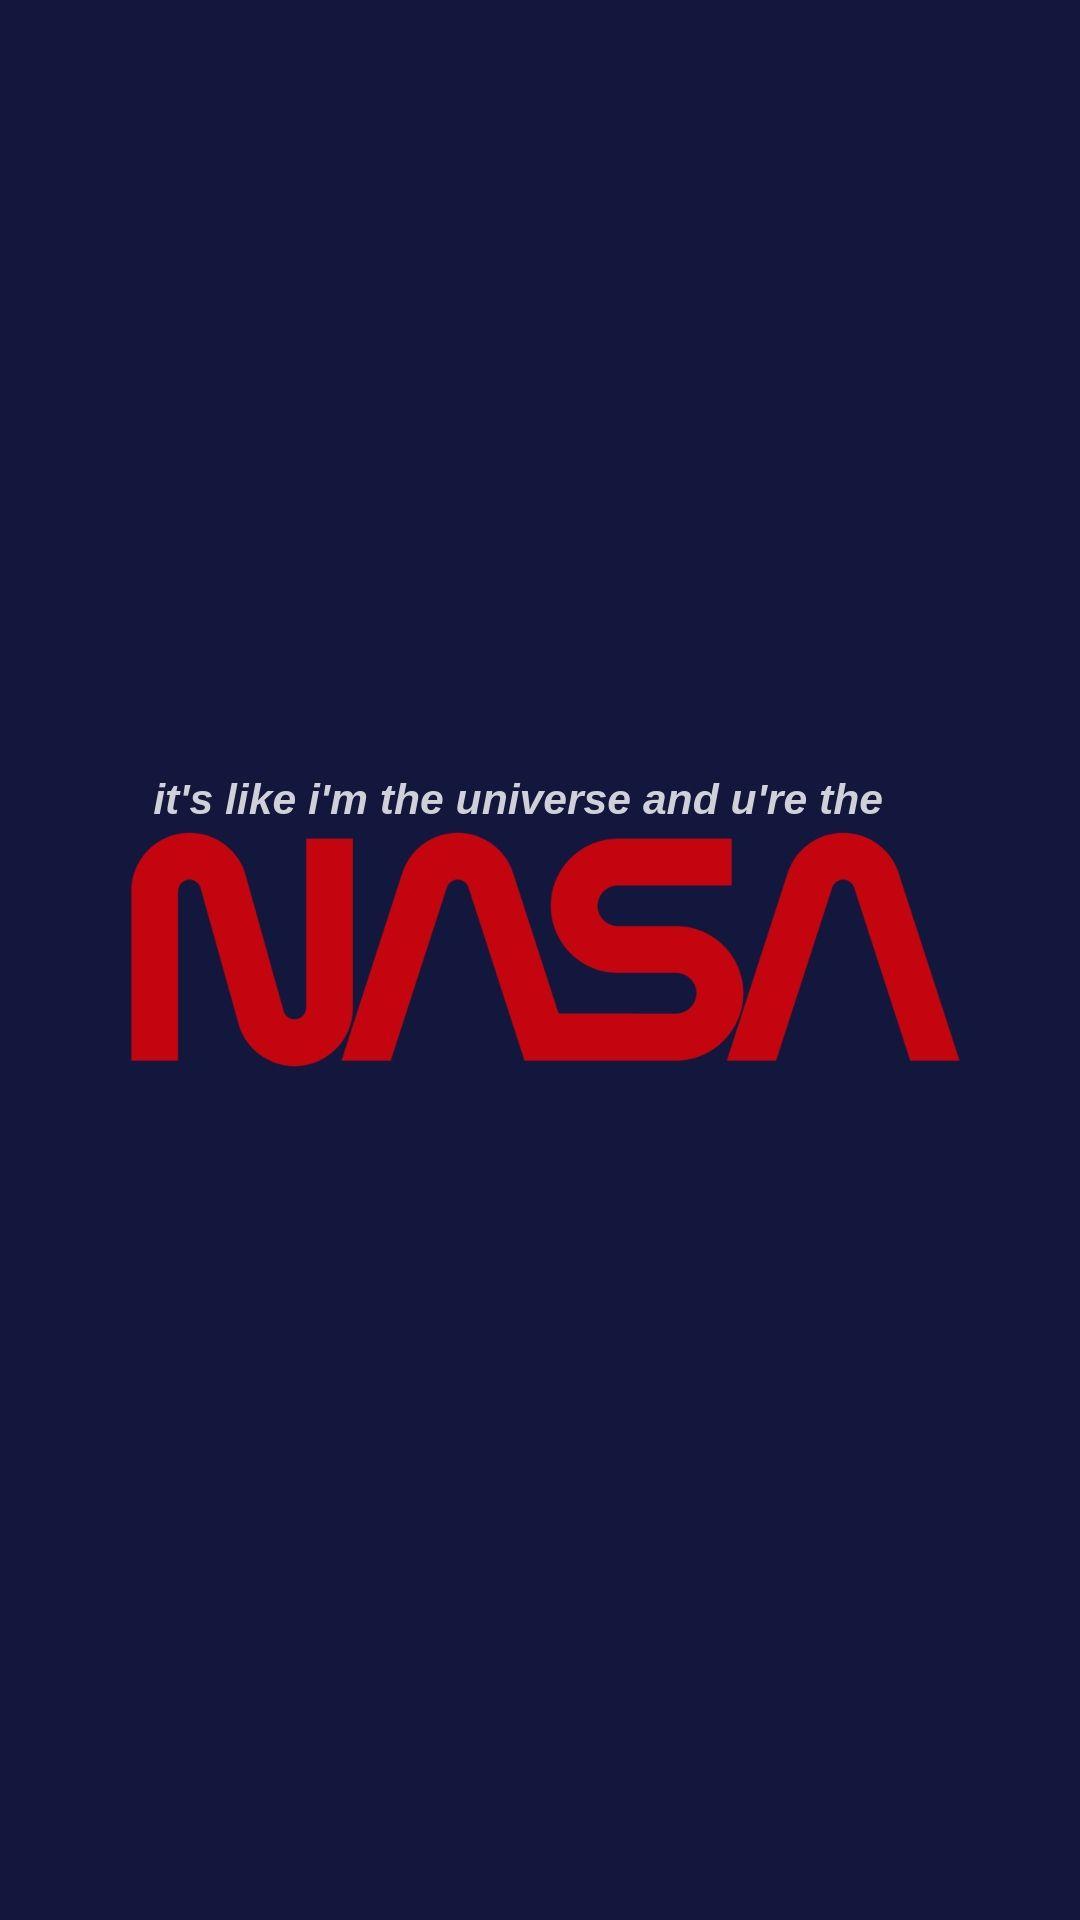 NASA ; ariana grande. iPhone wallpaper nasa, Ariana grande